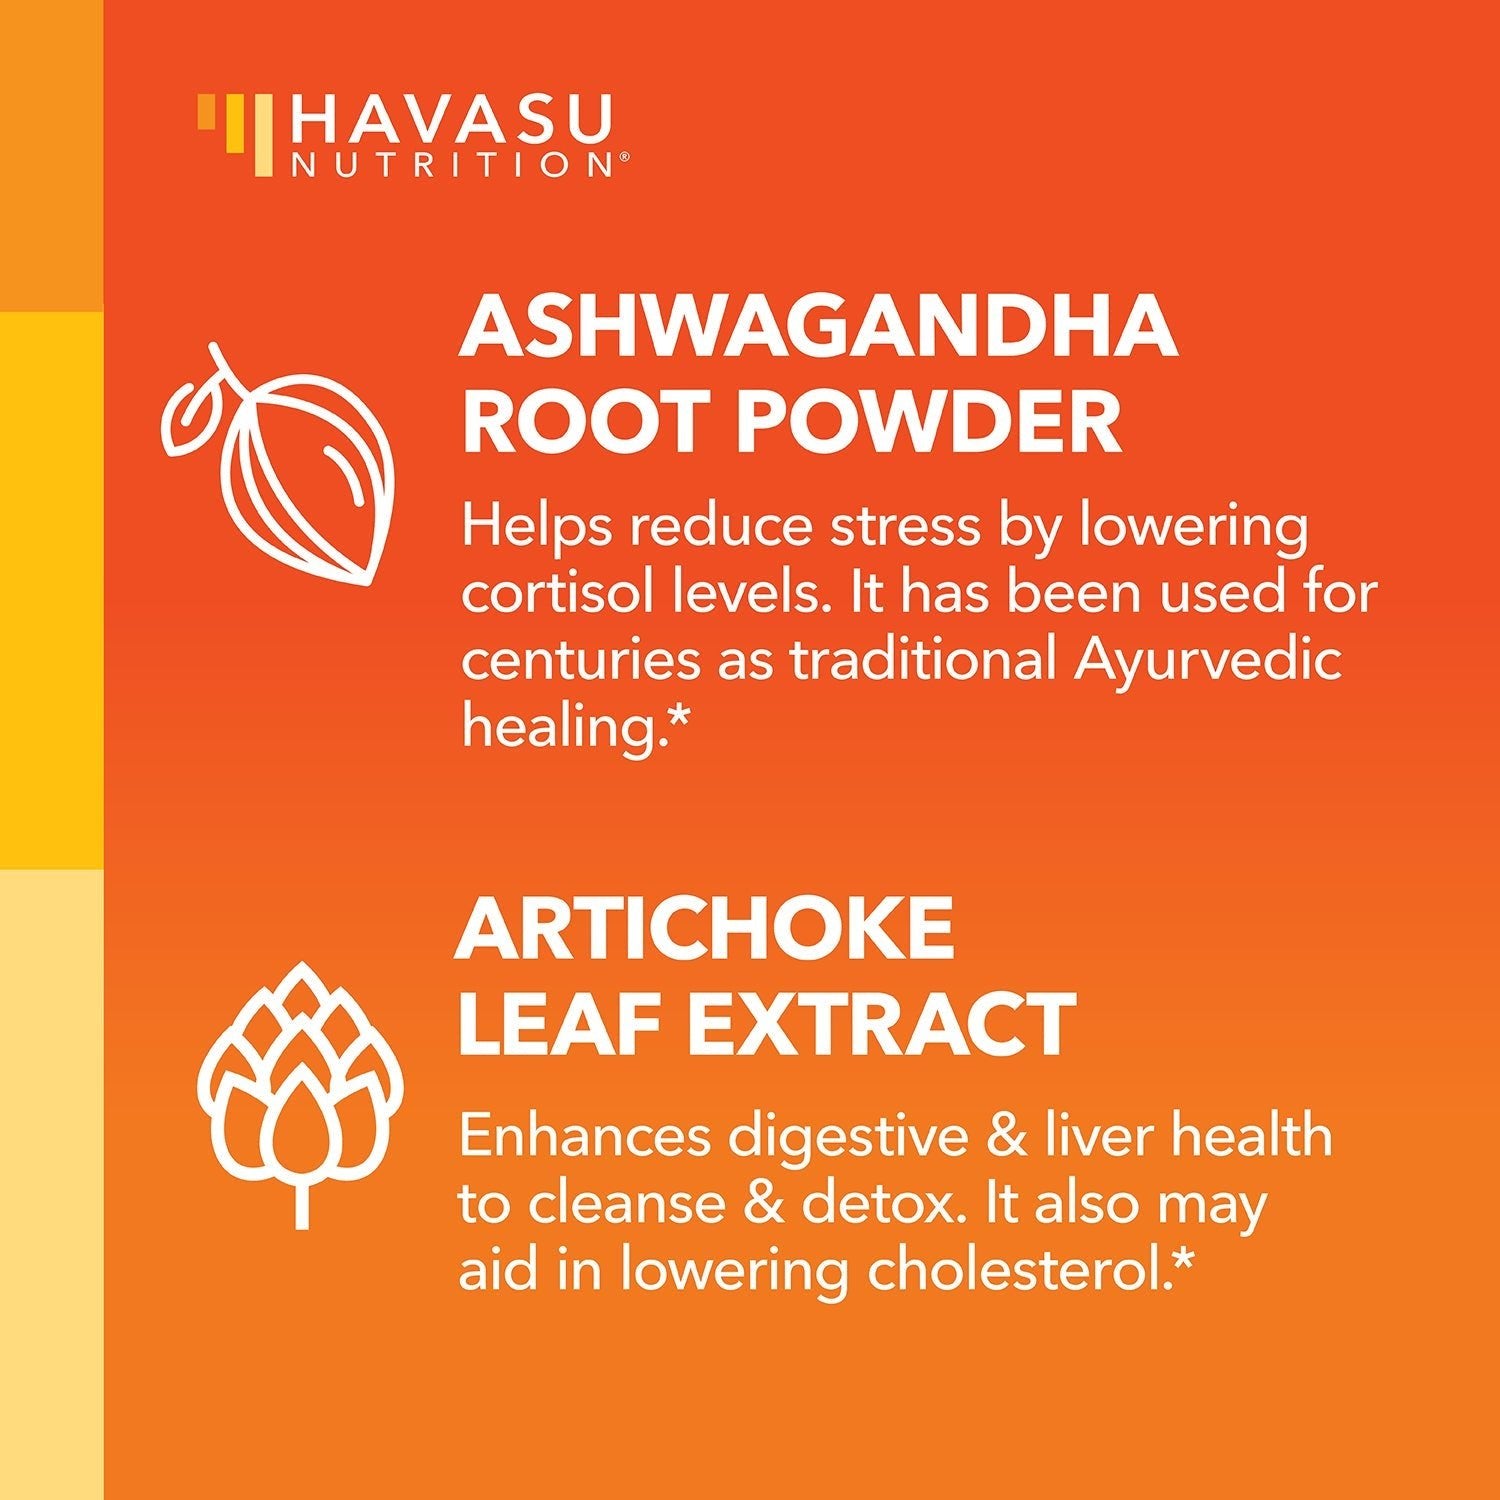 Ashwagandha Capsules, 90ct - Havasu Nutrition